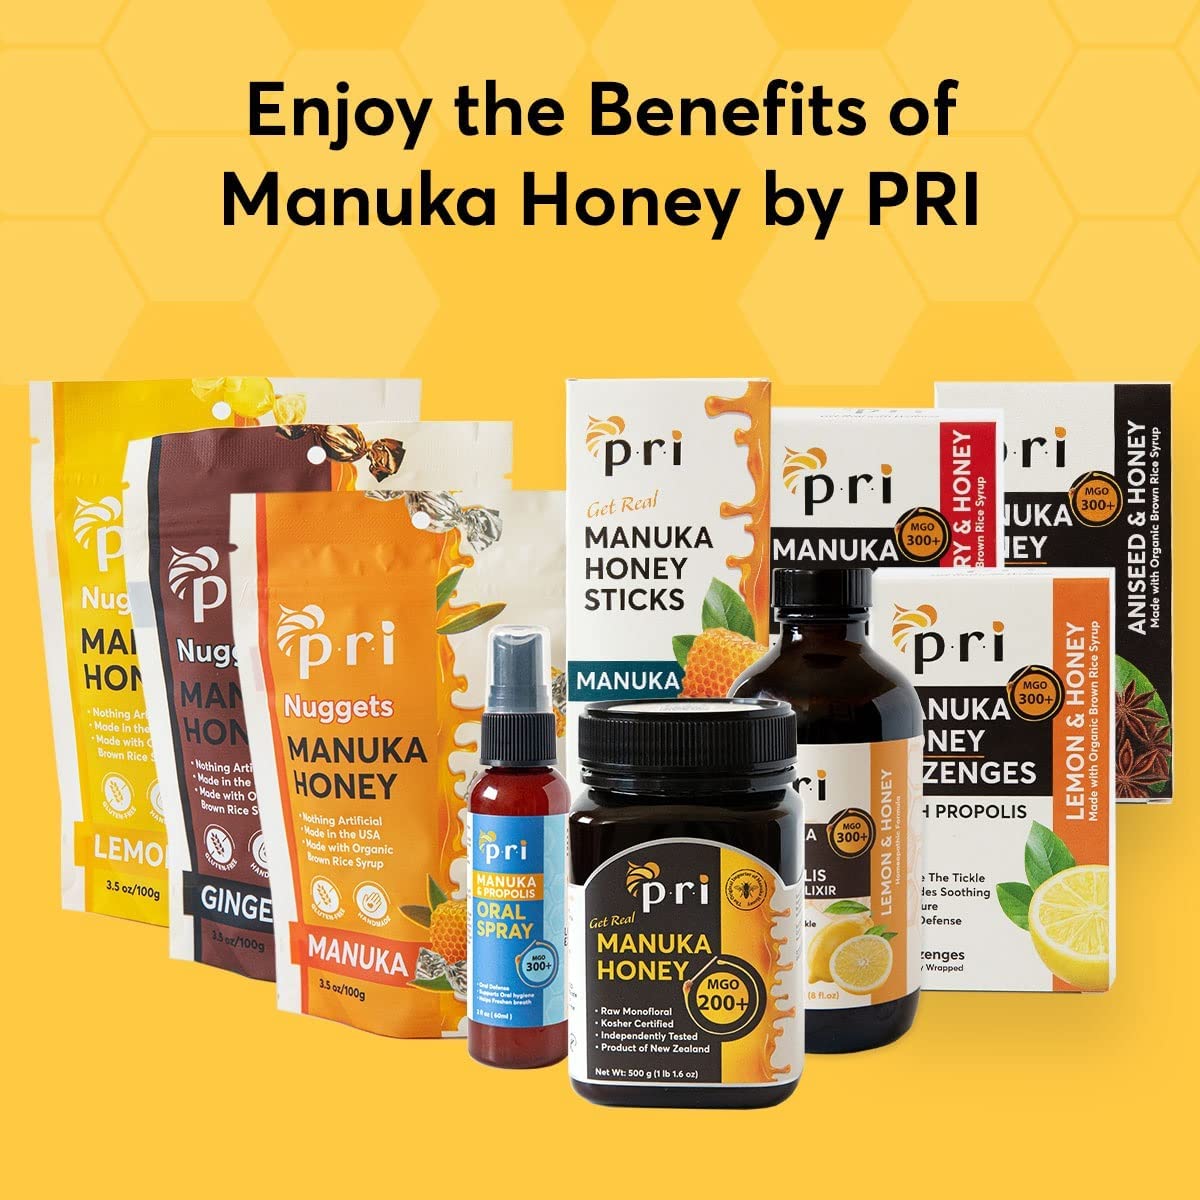 PRI Natural Dry Cough Syrup with Manuka Honey, Propolis, Tea Tree Oil and Vitamin C - Sore Throat & Immune Support, Lemon Flavor, 8oz